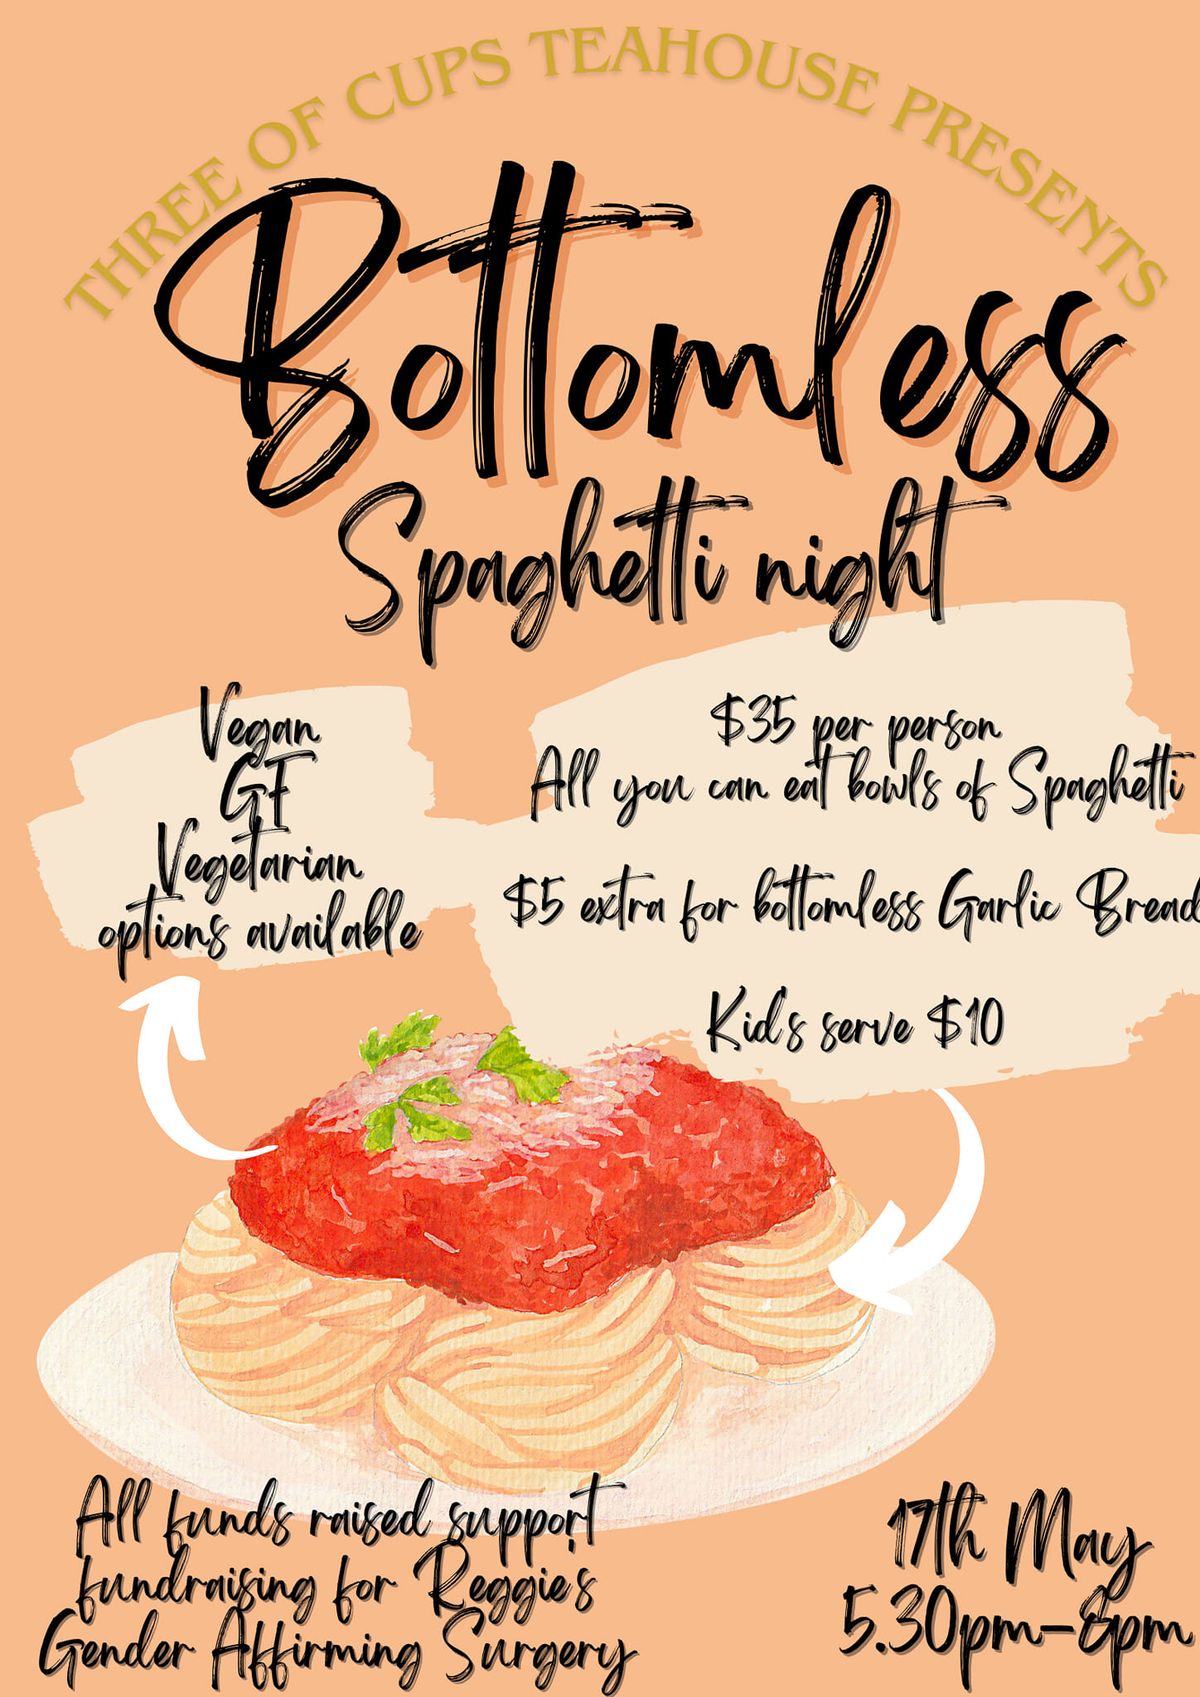 Bottomless Spaghetti Fundraiser! 